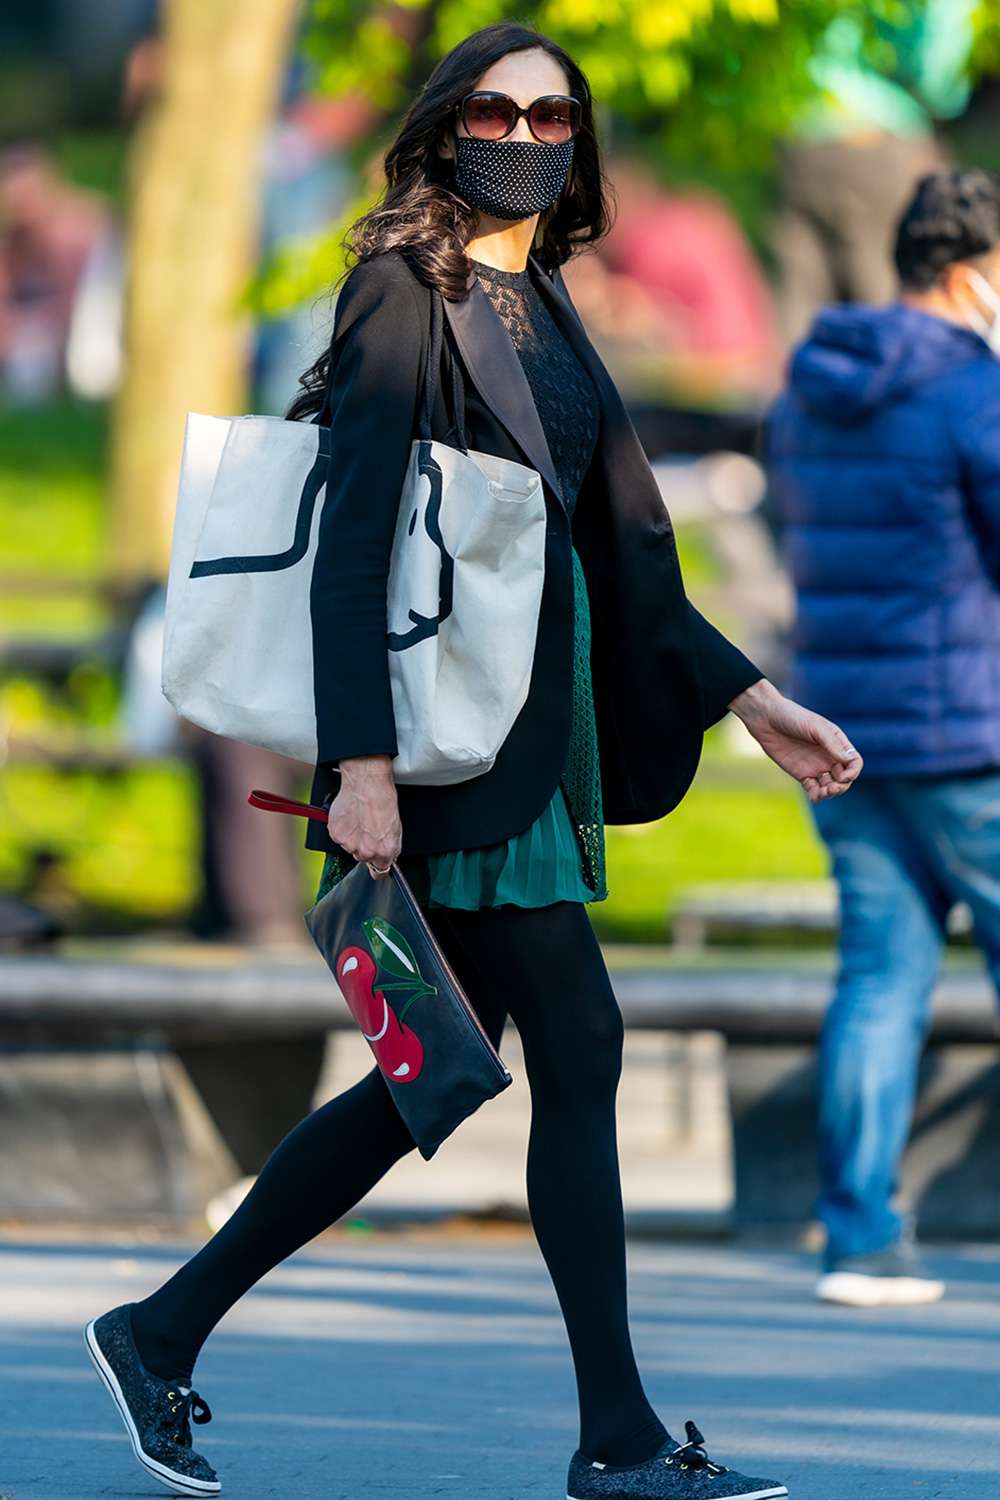 Famke Janssen is seen in Washington Square Park on May 10, 2020 in New York City